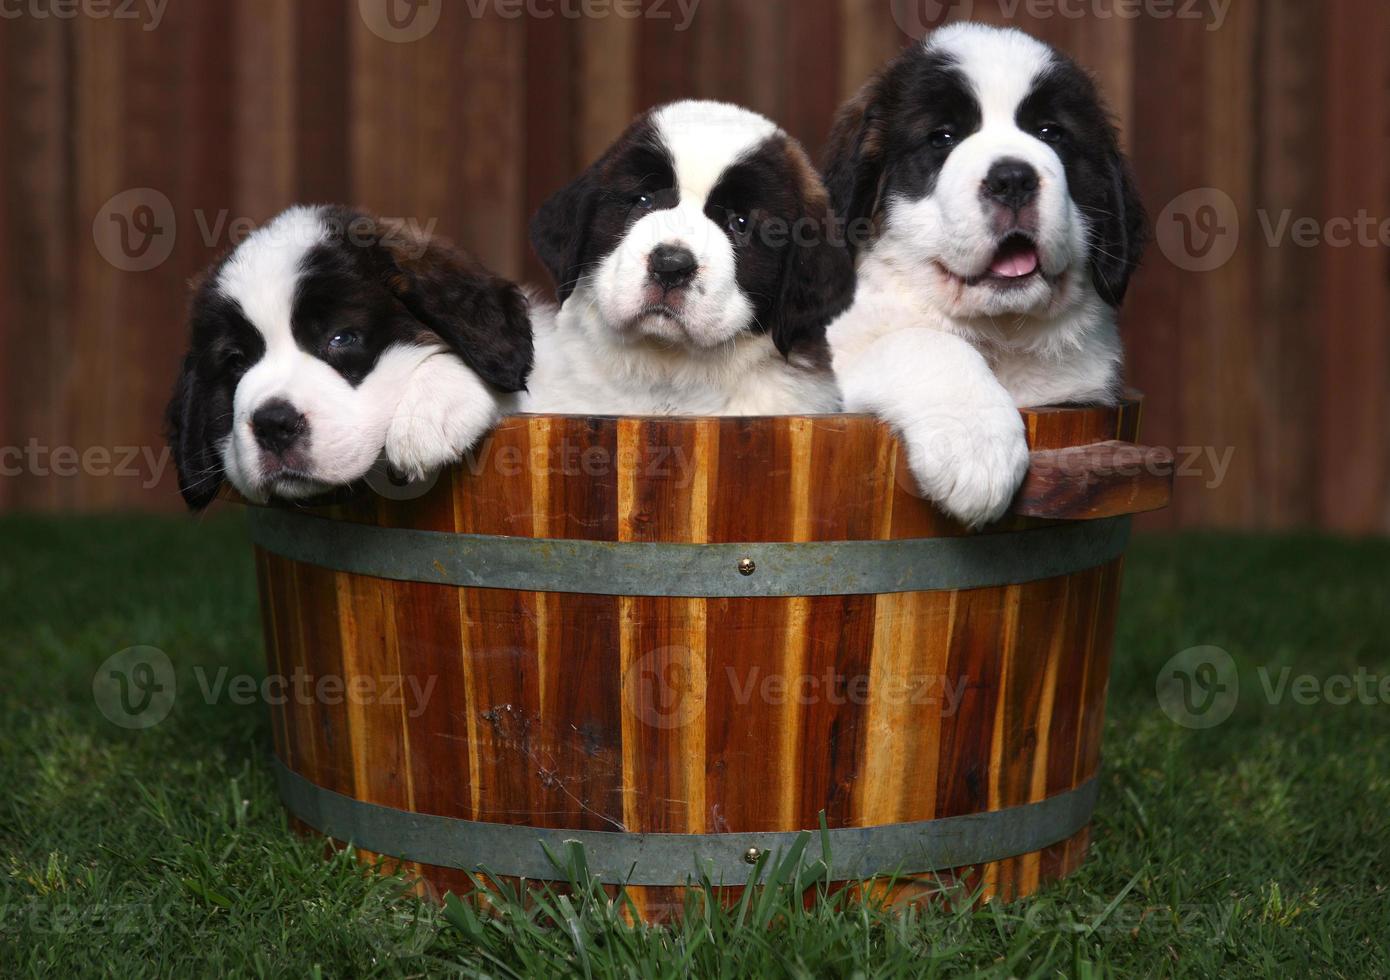 Tres adorables cachorros de San Bernardo en un barril foto